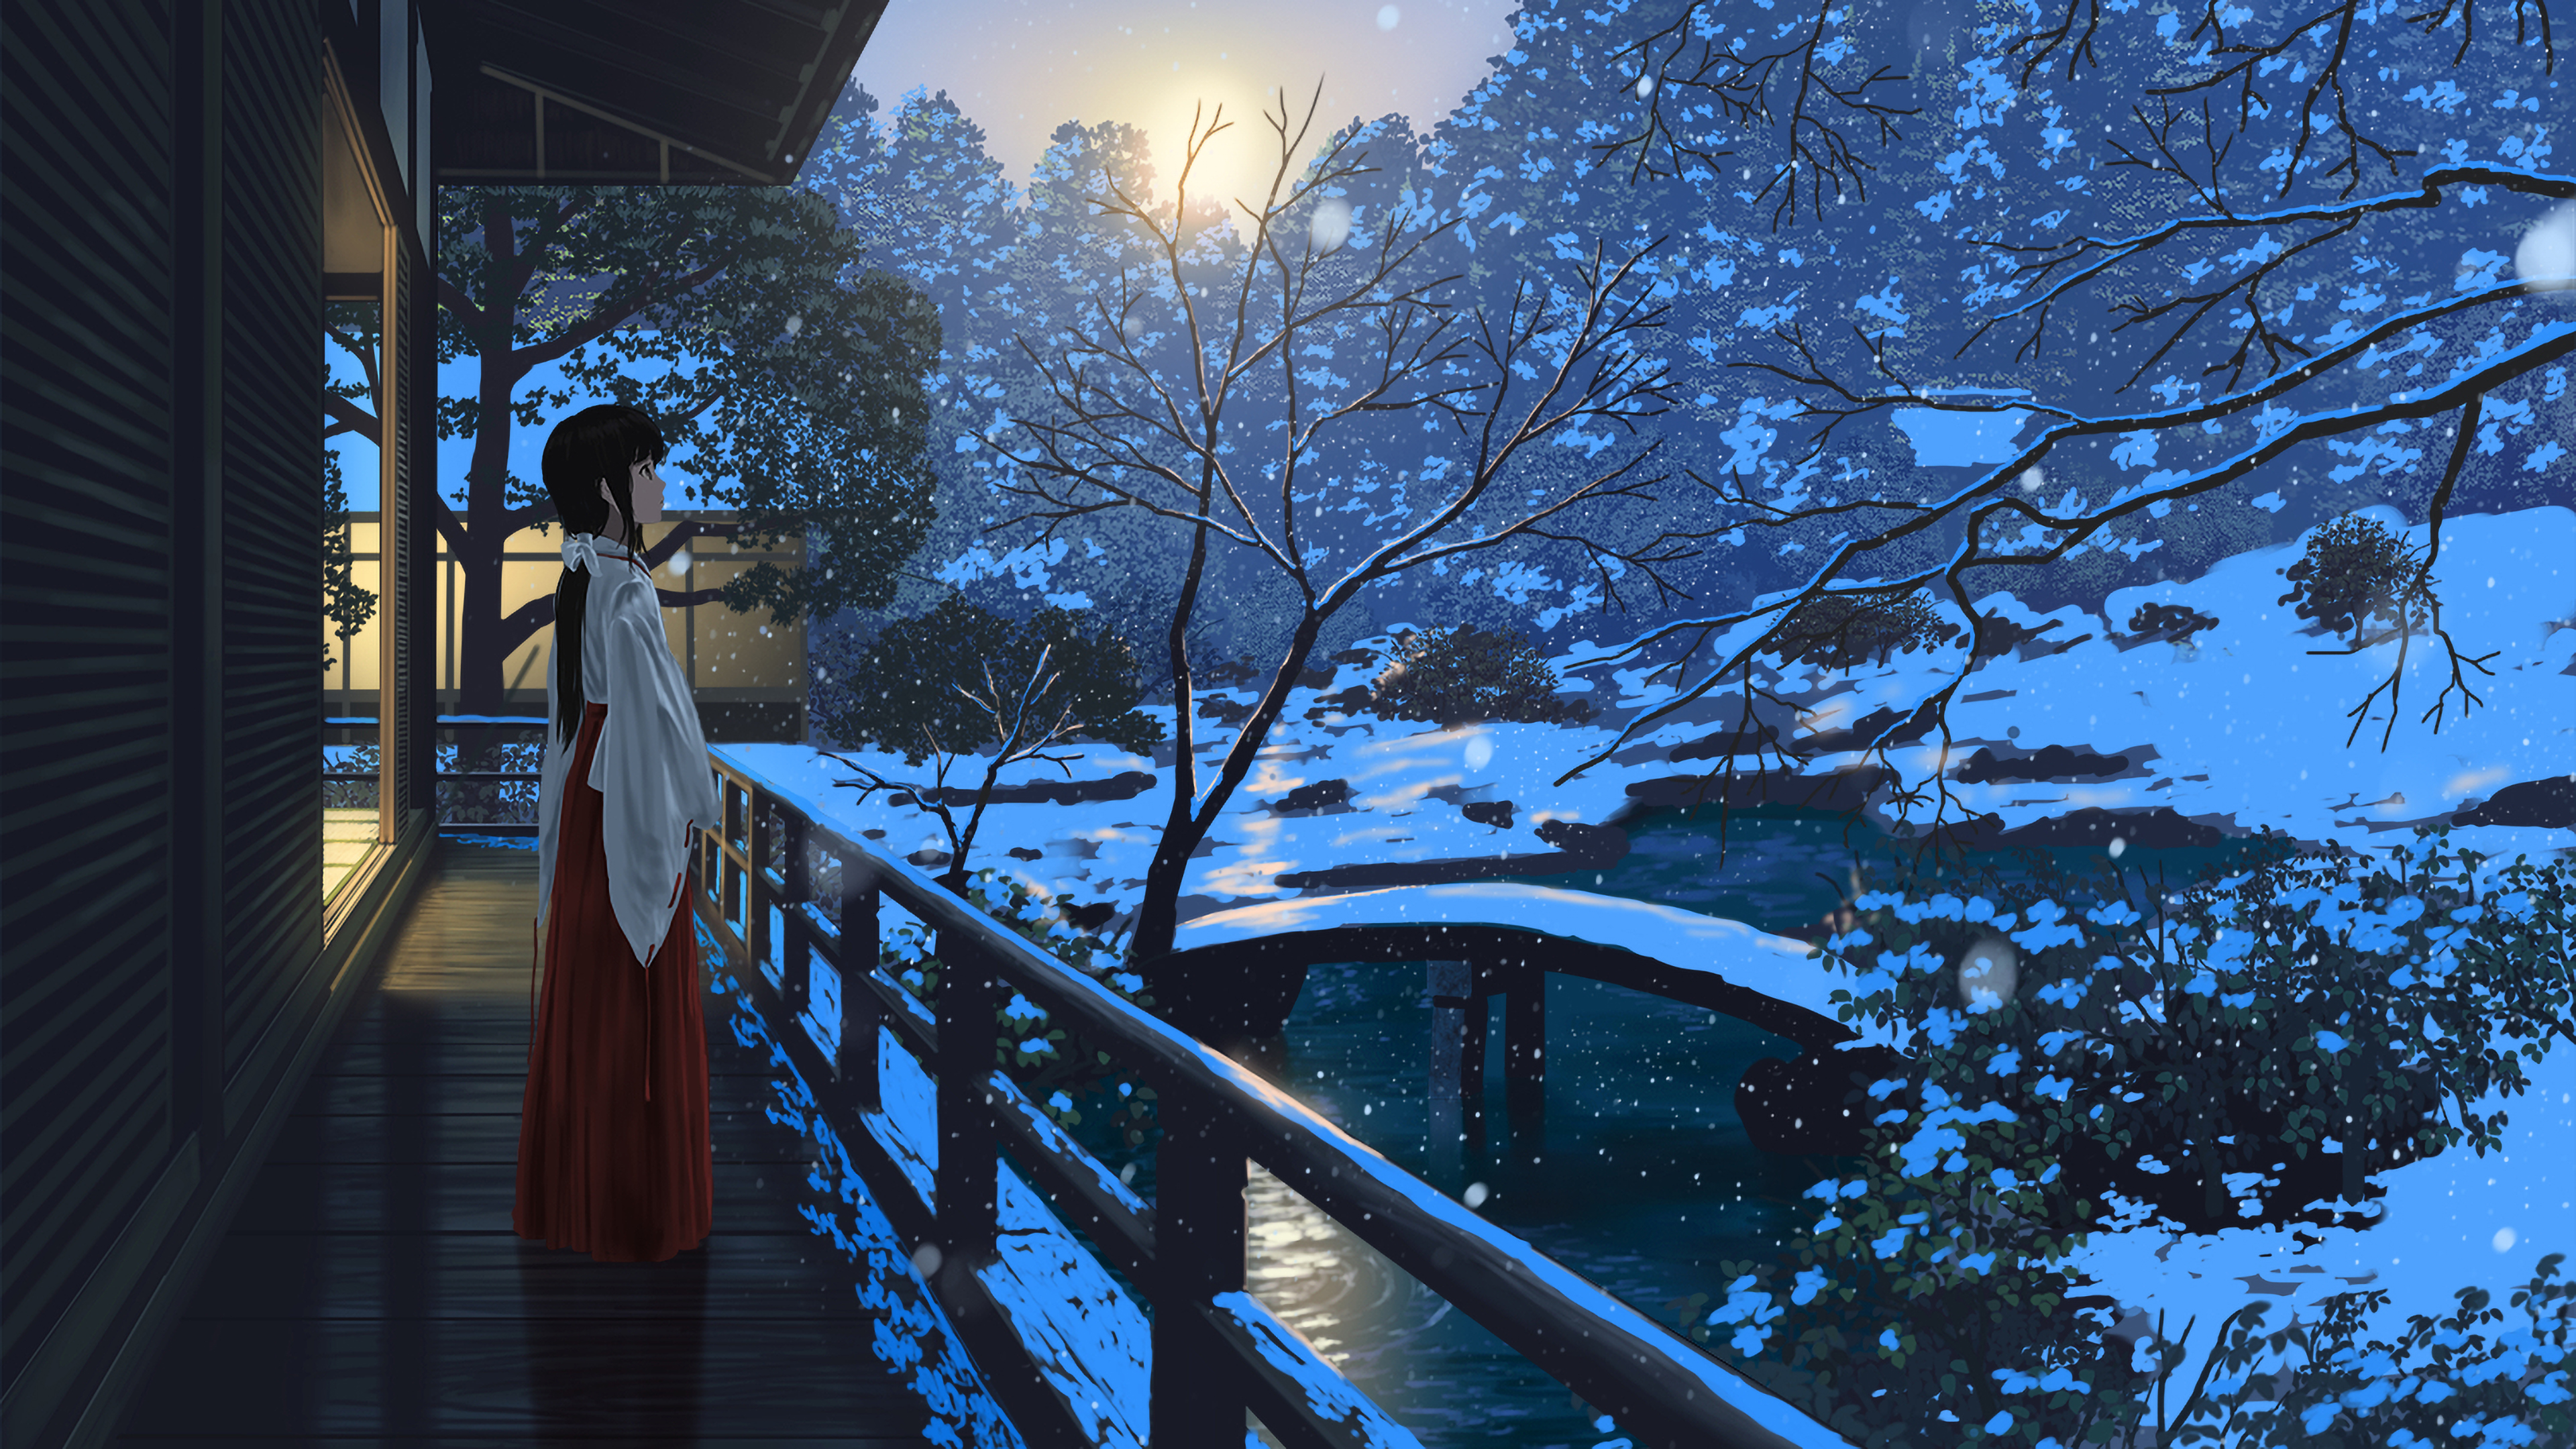 Anime Girls Kimono Alone Outdoors Bridge Wood House Trees Snowing Snow River Stream Sun Hair Bow Rai 3840x2160